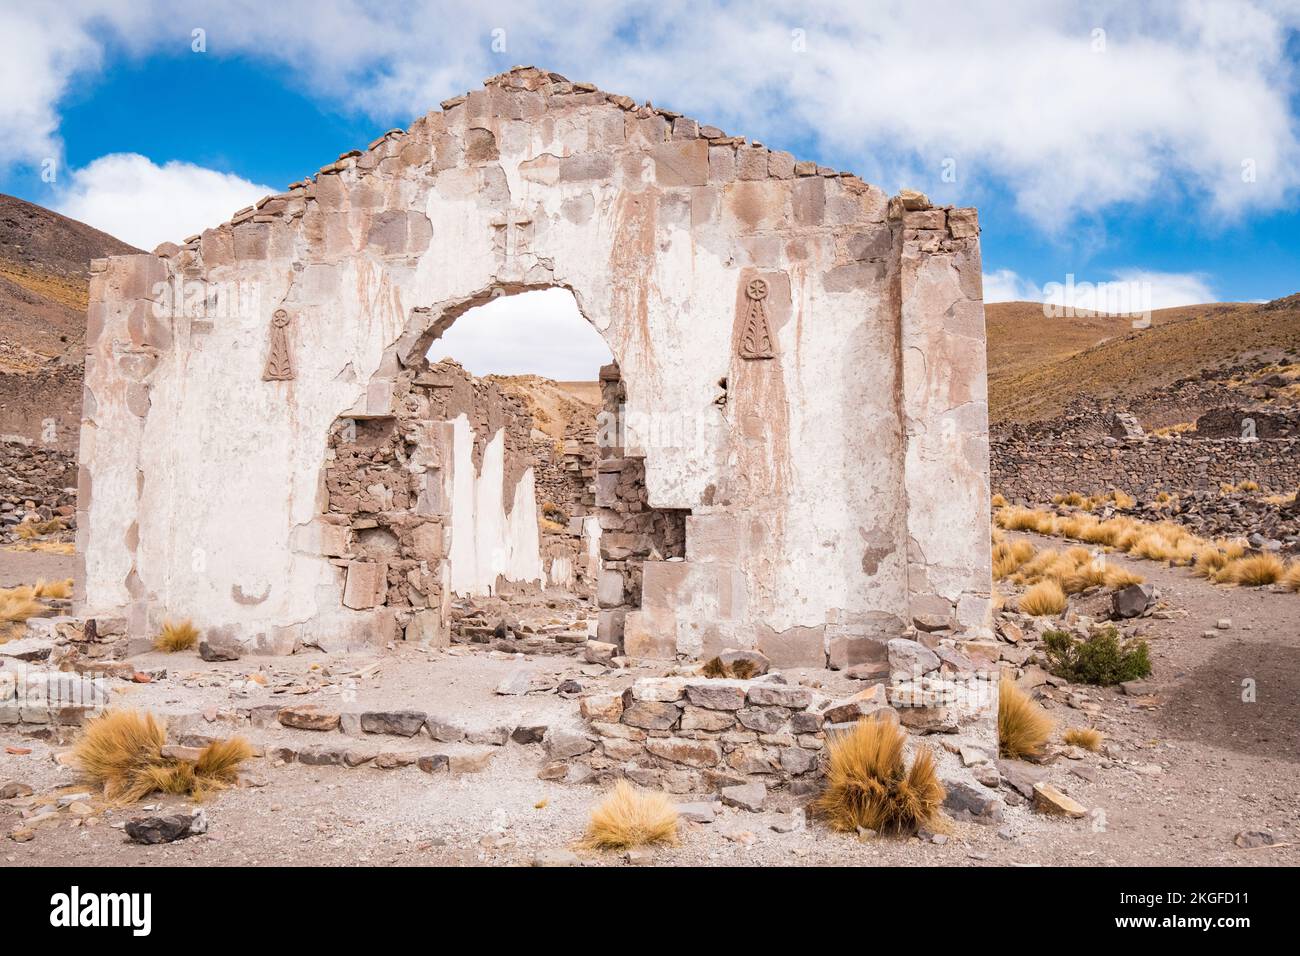 Ruins of the abandoned mining town of San Antonio de Lipez in the Bolivian High Plains, Sur Lipez Province, Bolivia Stock Photo